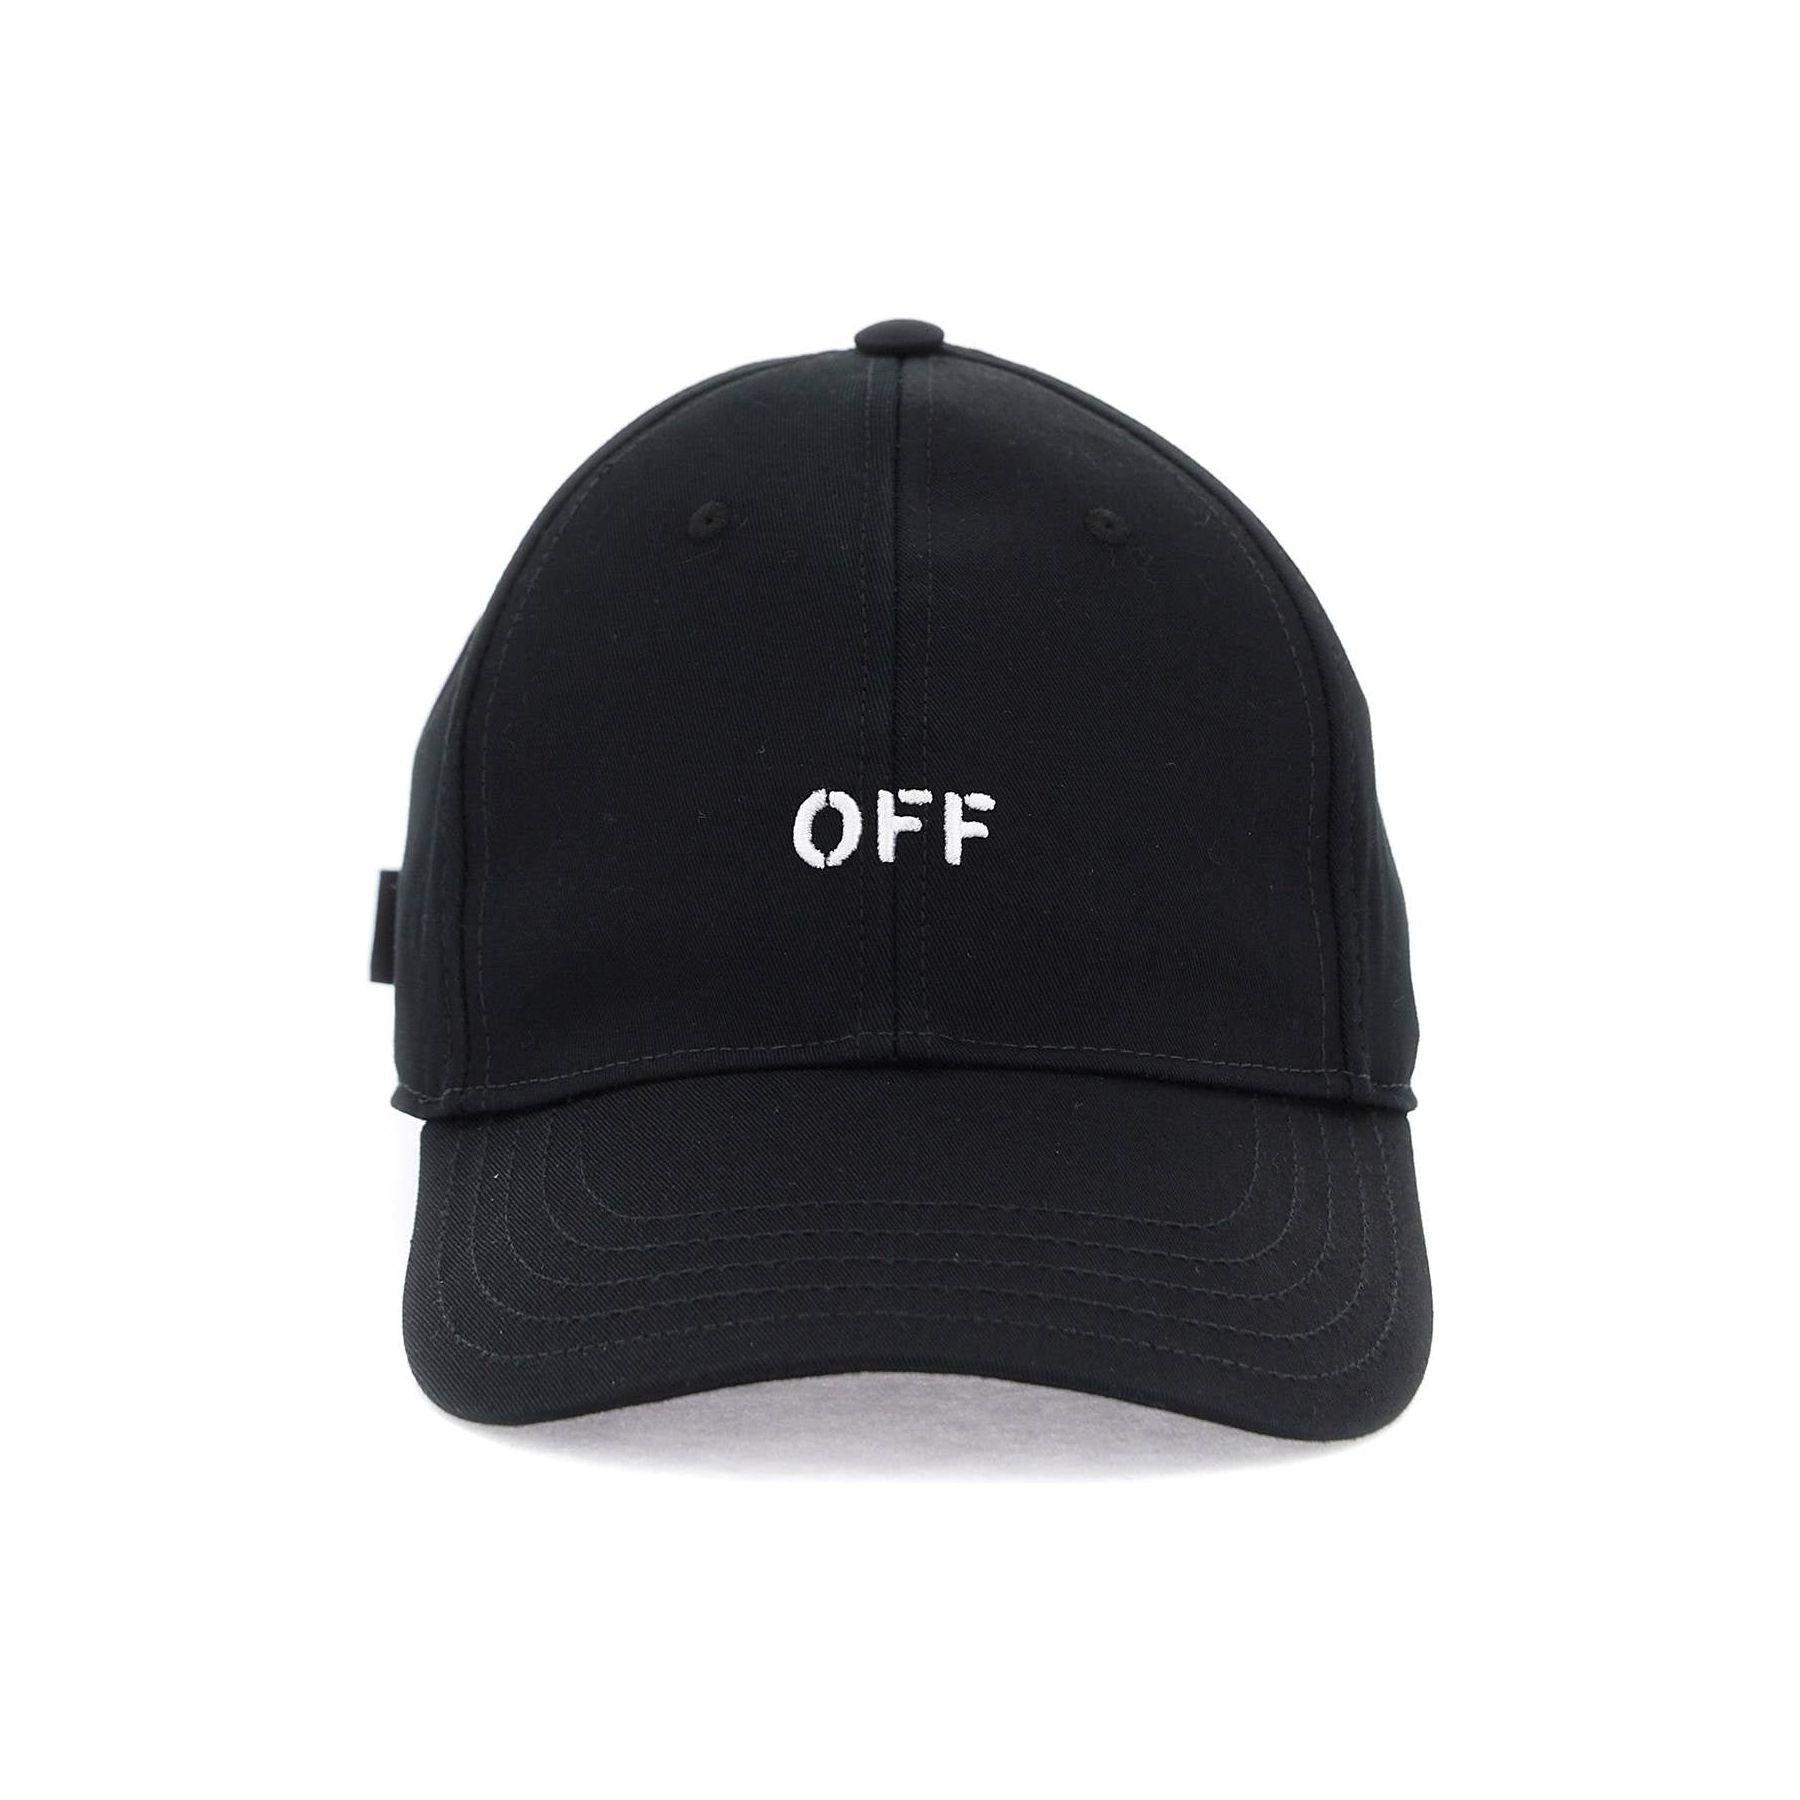 OFF Logo Embroidered Baseball Cap